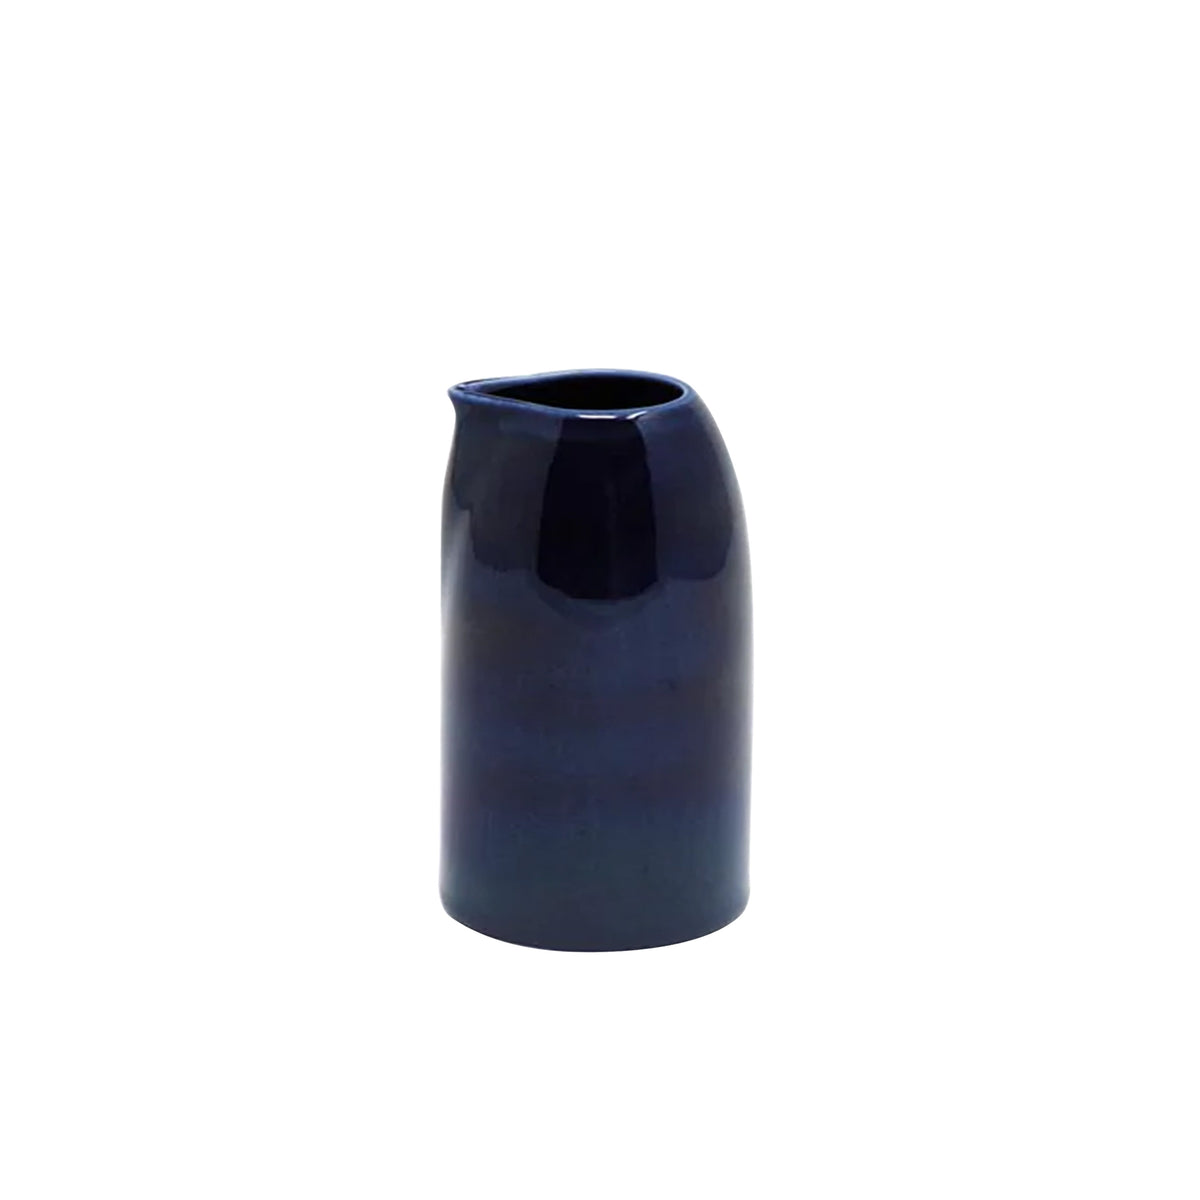 BLUE - Sake jug, small